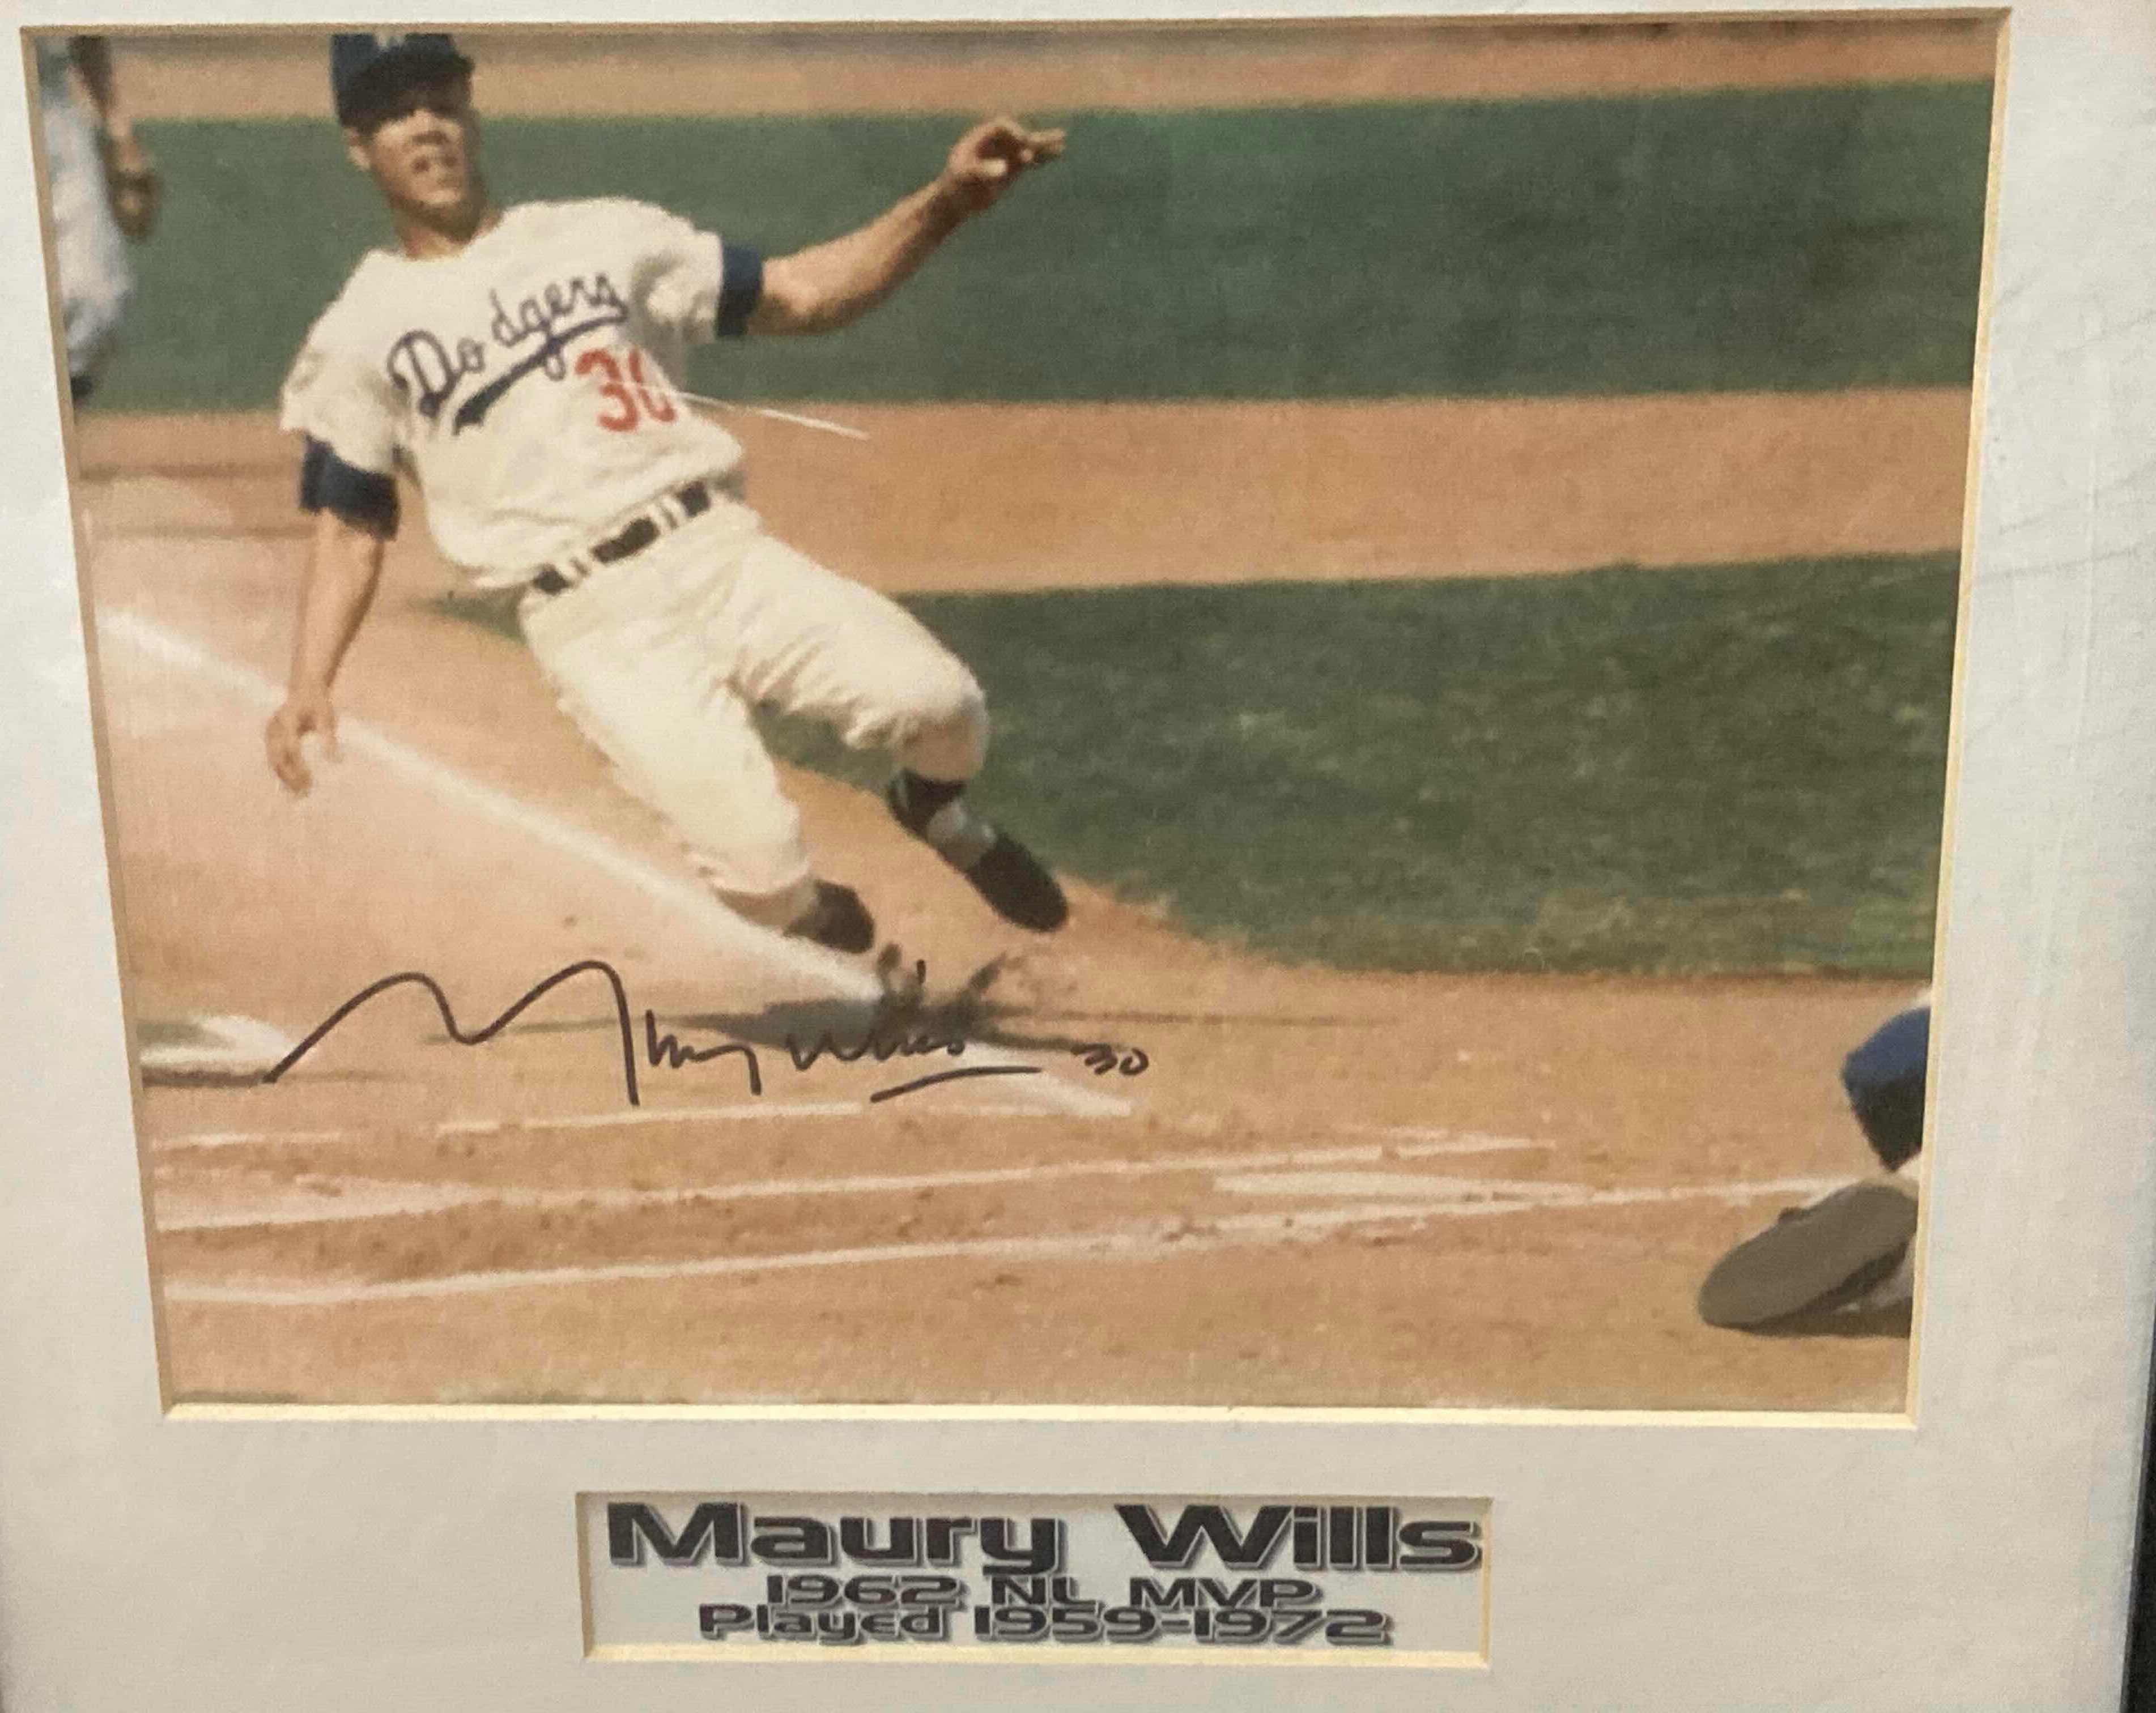 Photo 2 of MAURY WILLS 1962 NL MVP MLB BASEBALL FRAMED PHOTOGRAPH AUTOGRAPHED BY MAURY WILLS NO COA 14.5” X 14”